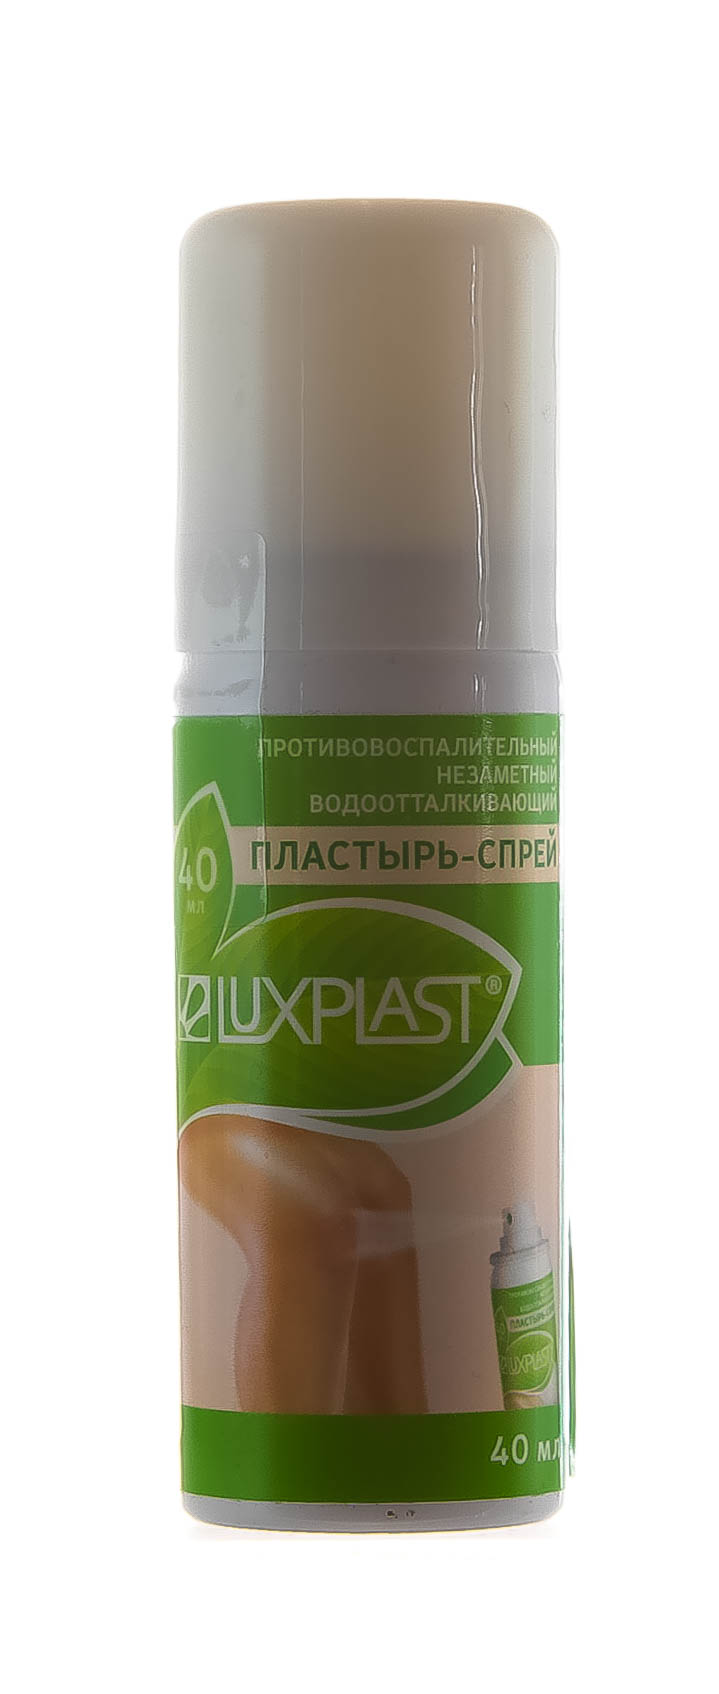 Luxplast Пластырь-спрей, 40 мл (Luxplast, Пластырь)